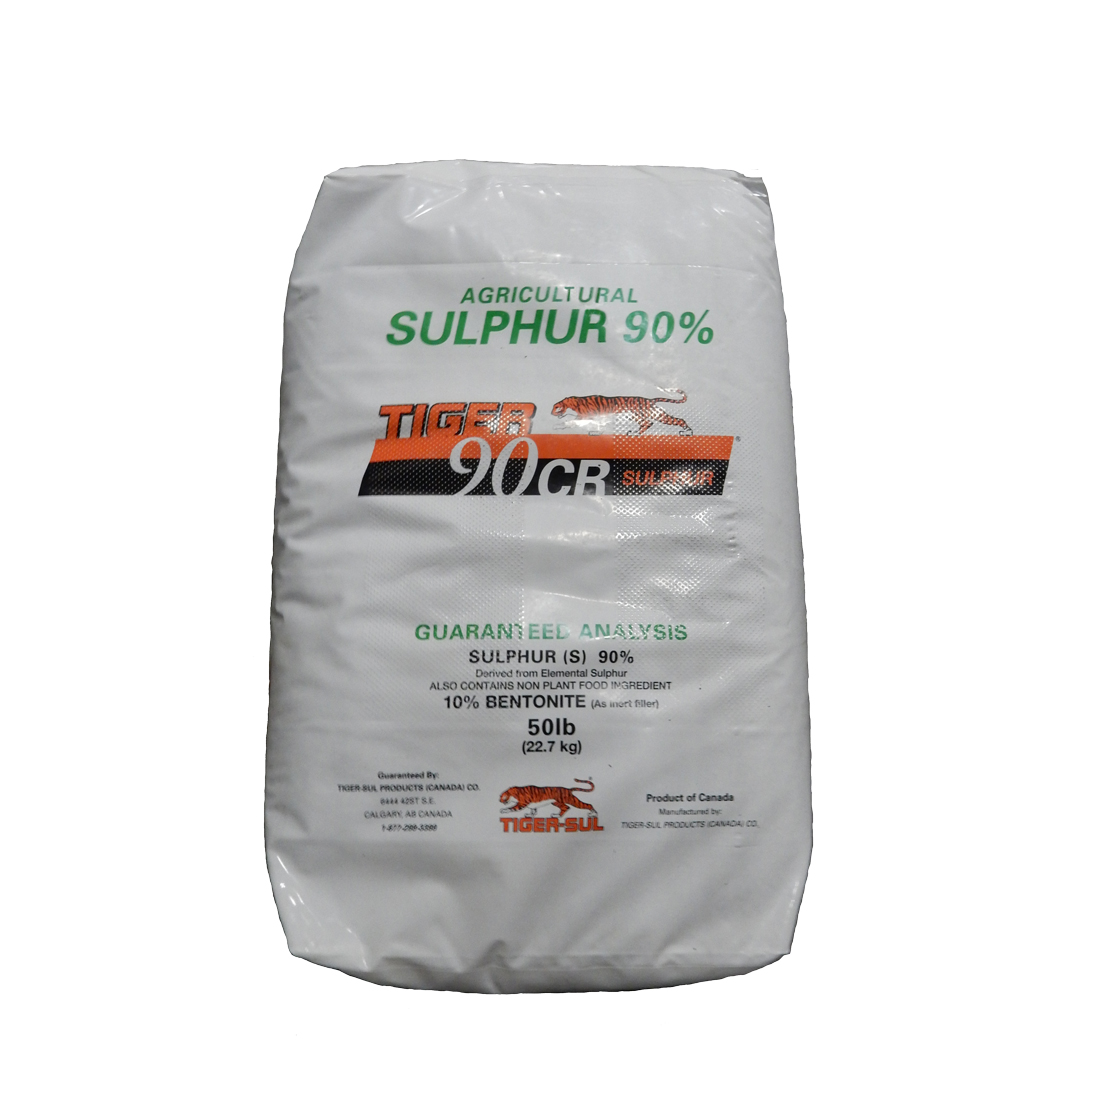 Sulfur 90% 50 lb Bag - Granular